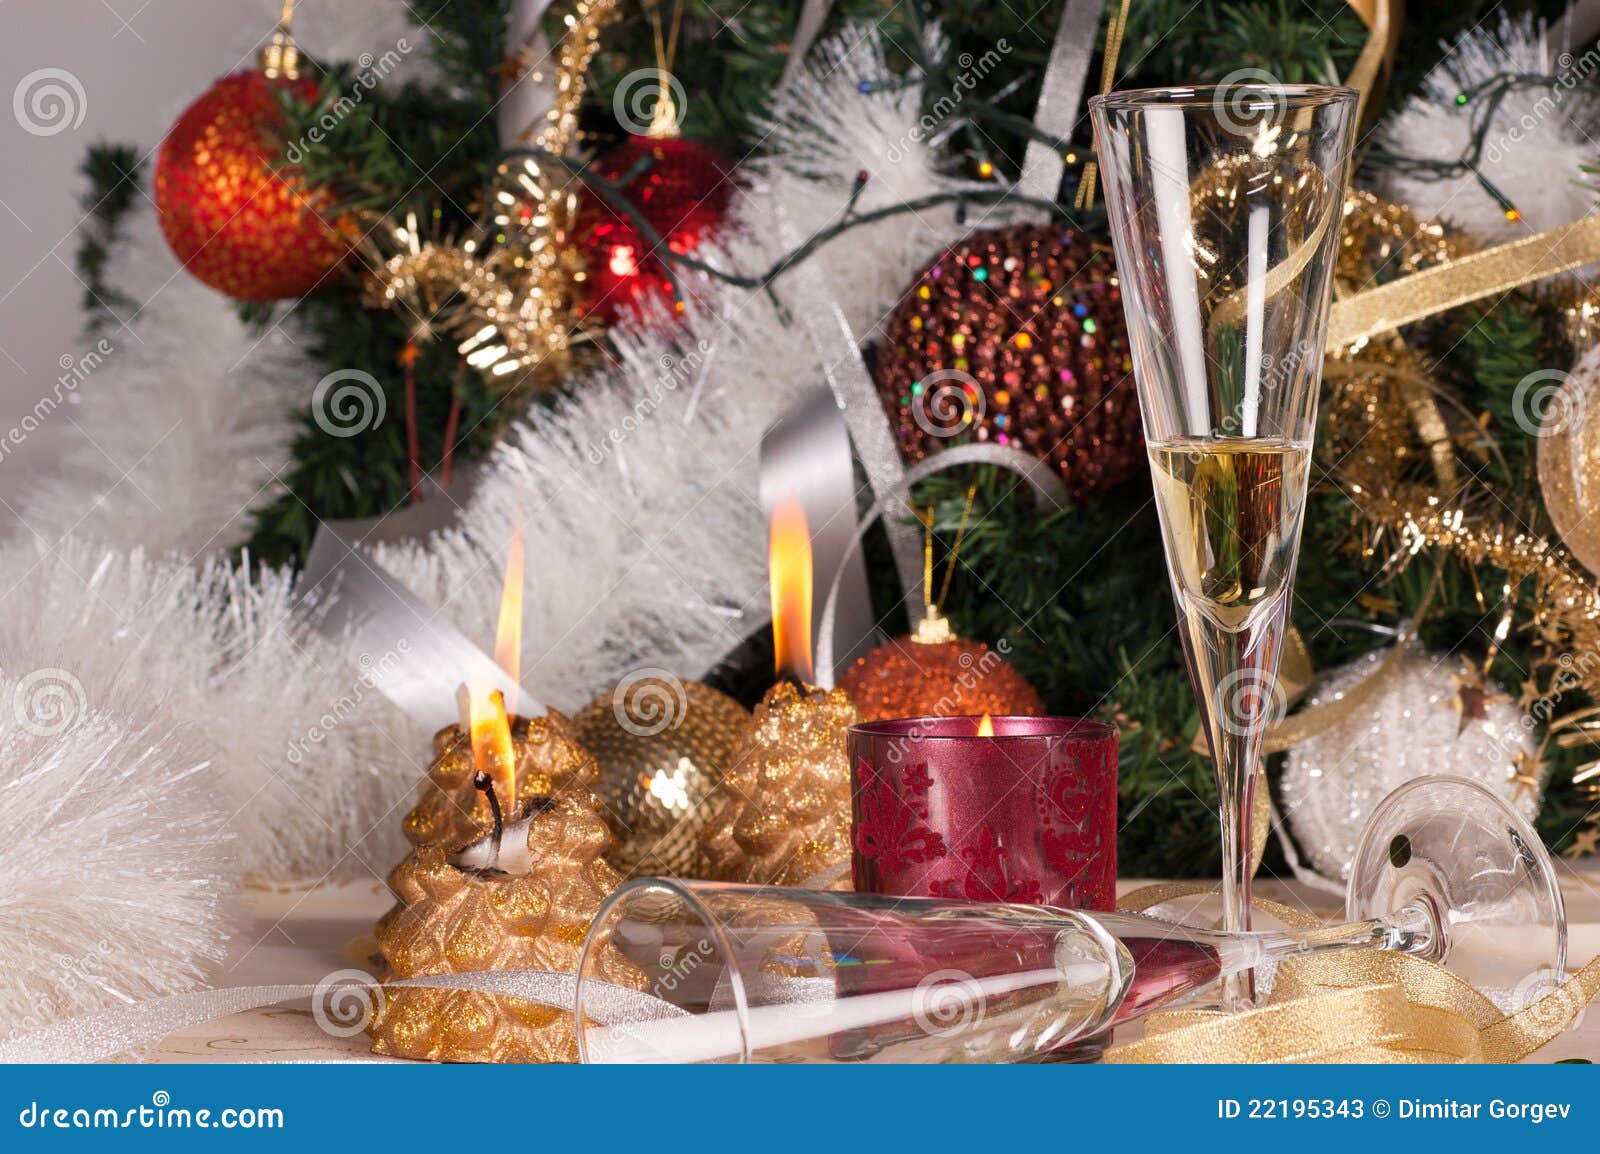 Christmas eve celebration stock image. Image of color - 22195343